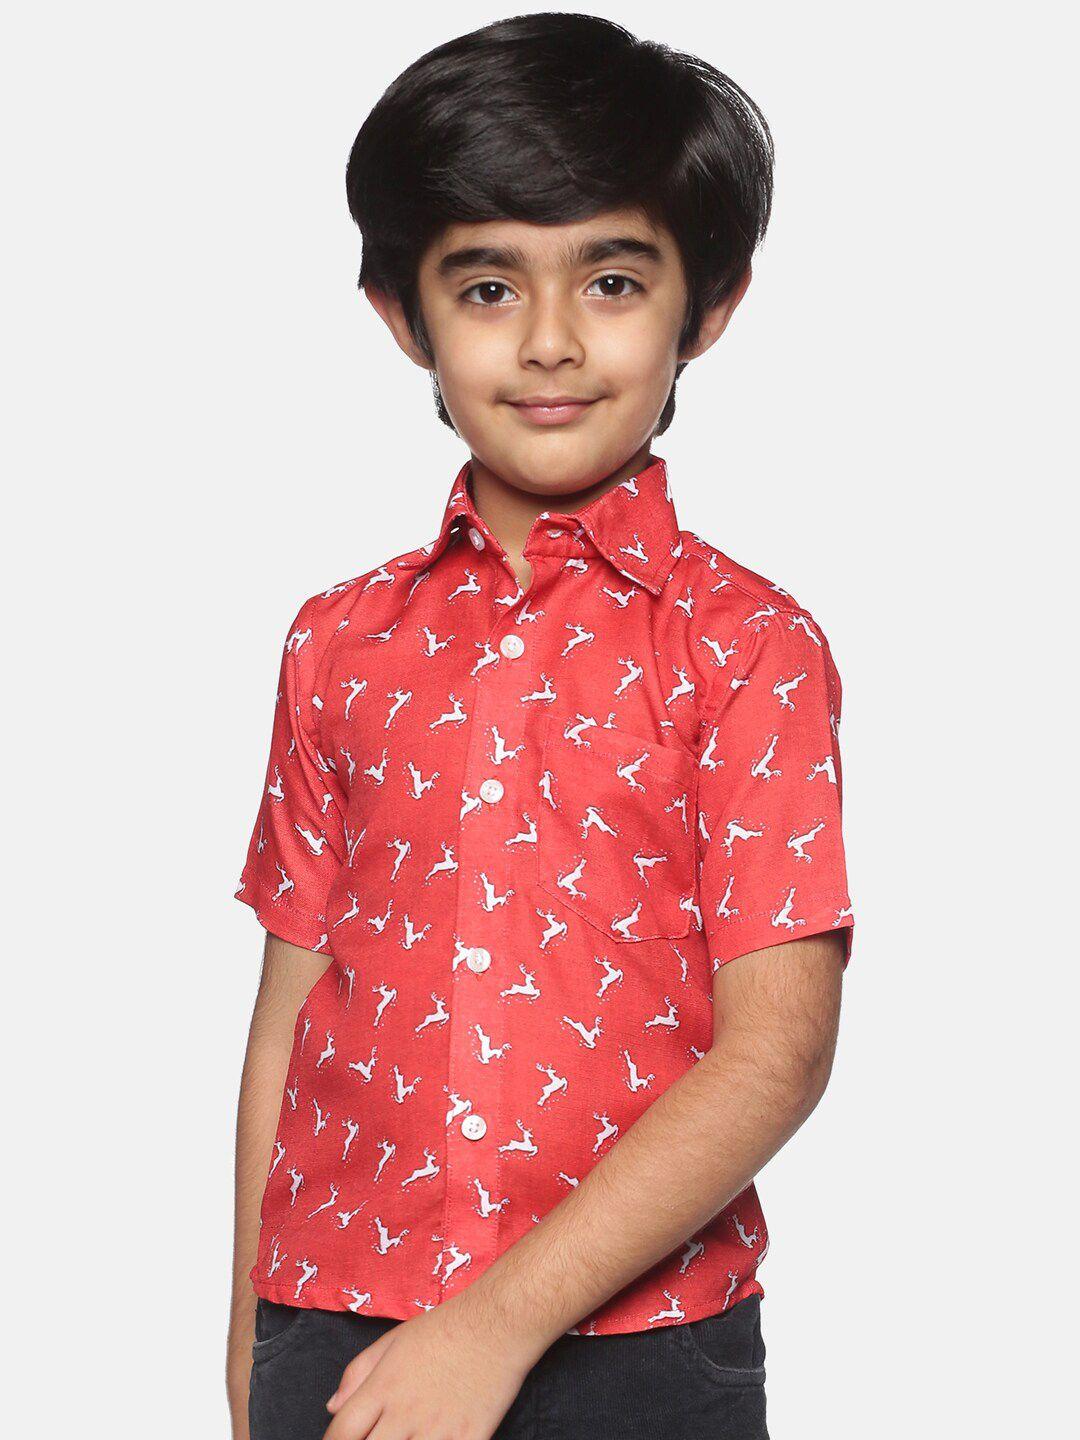 sethukrishna-boys-red-&-white-printed-party-shirt